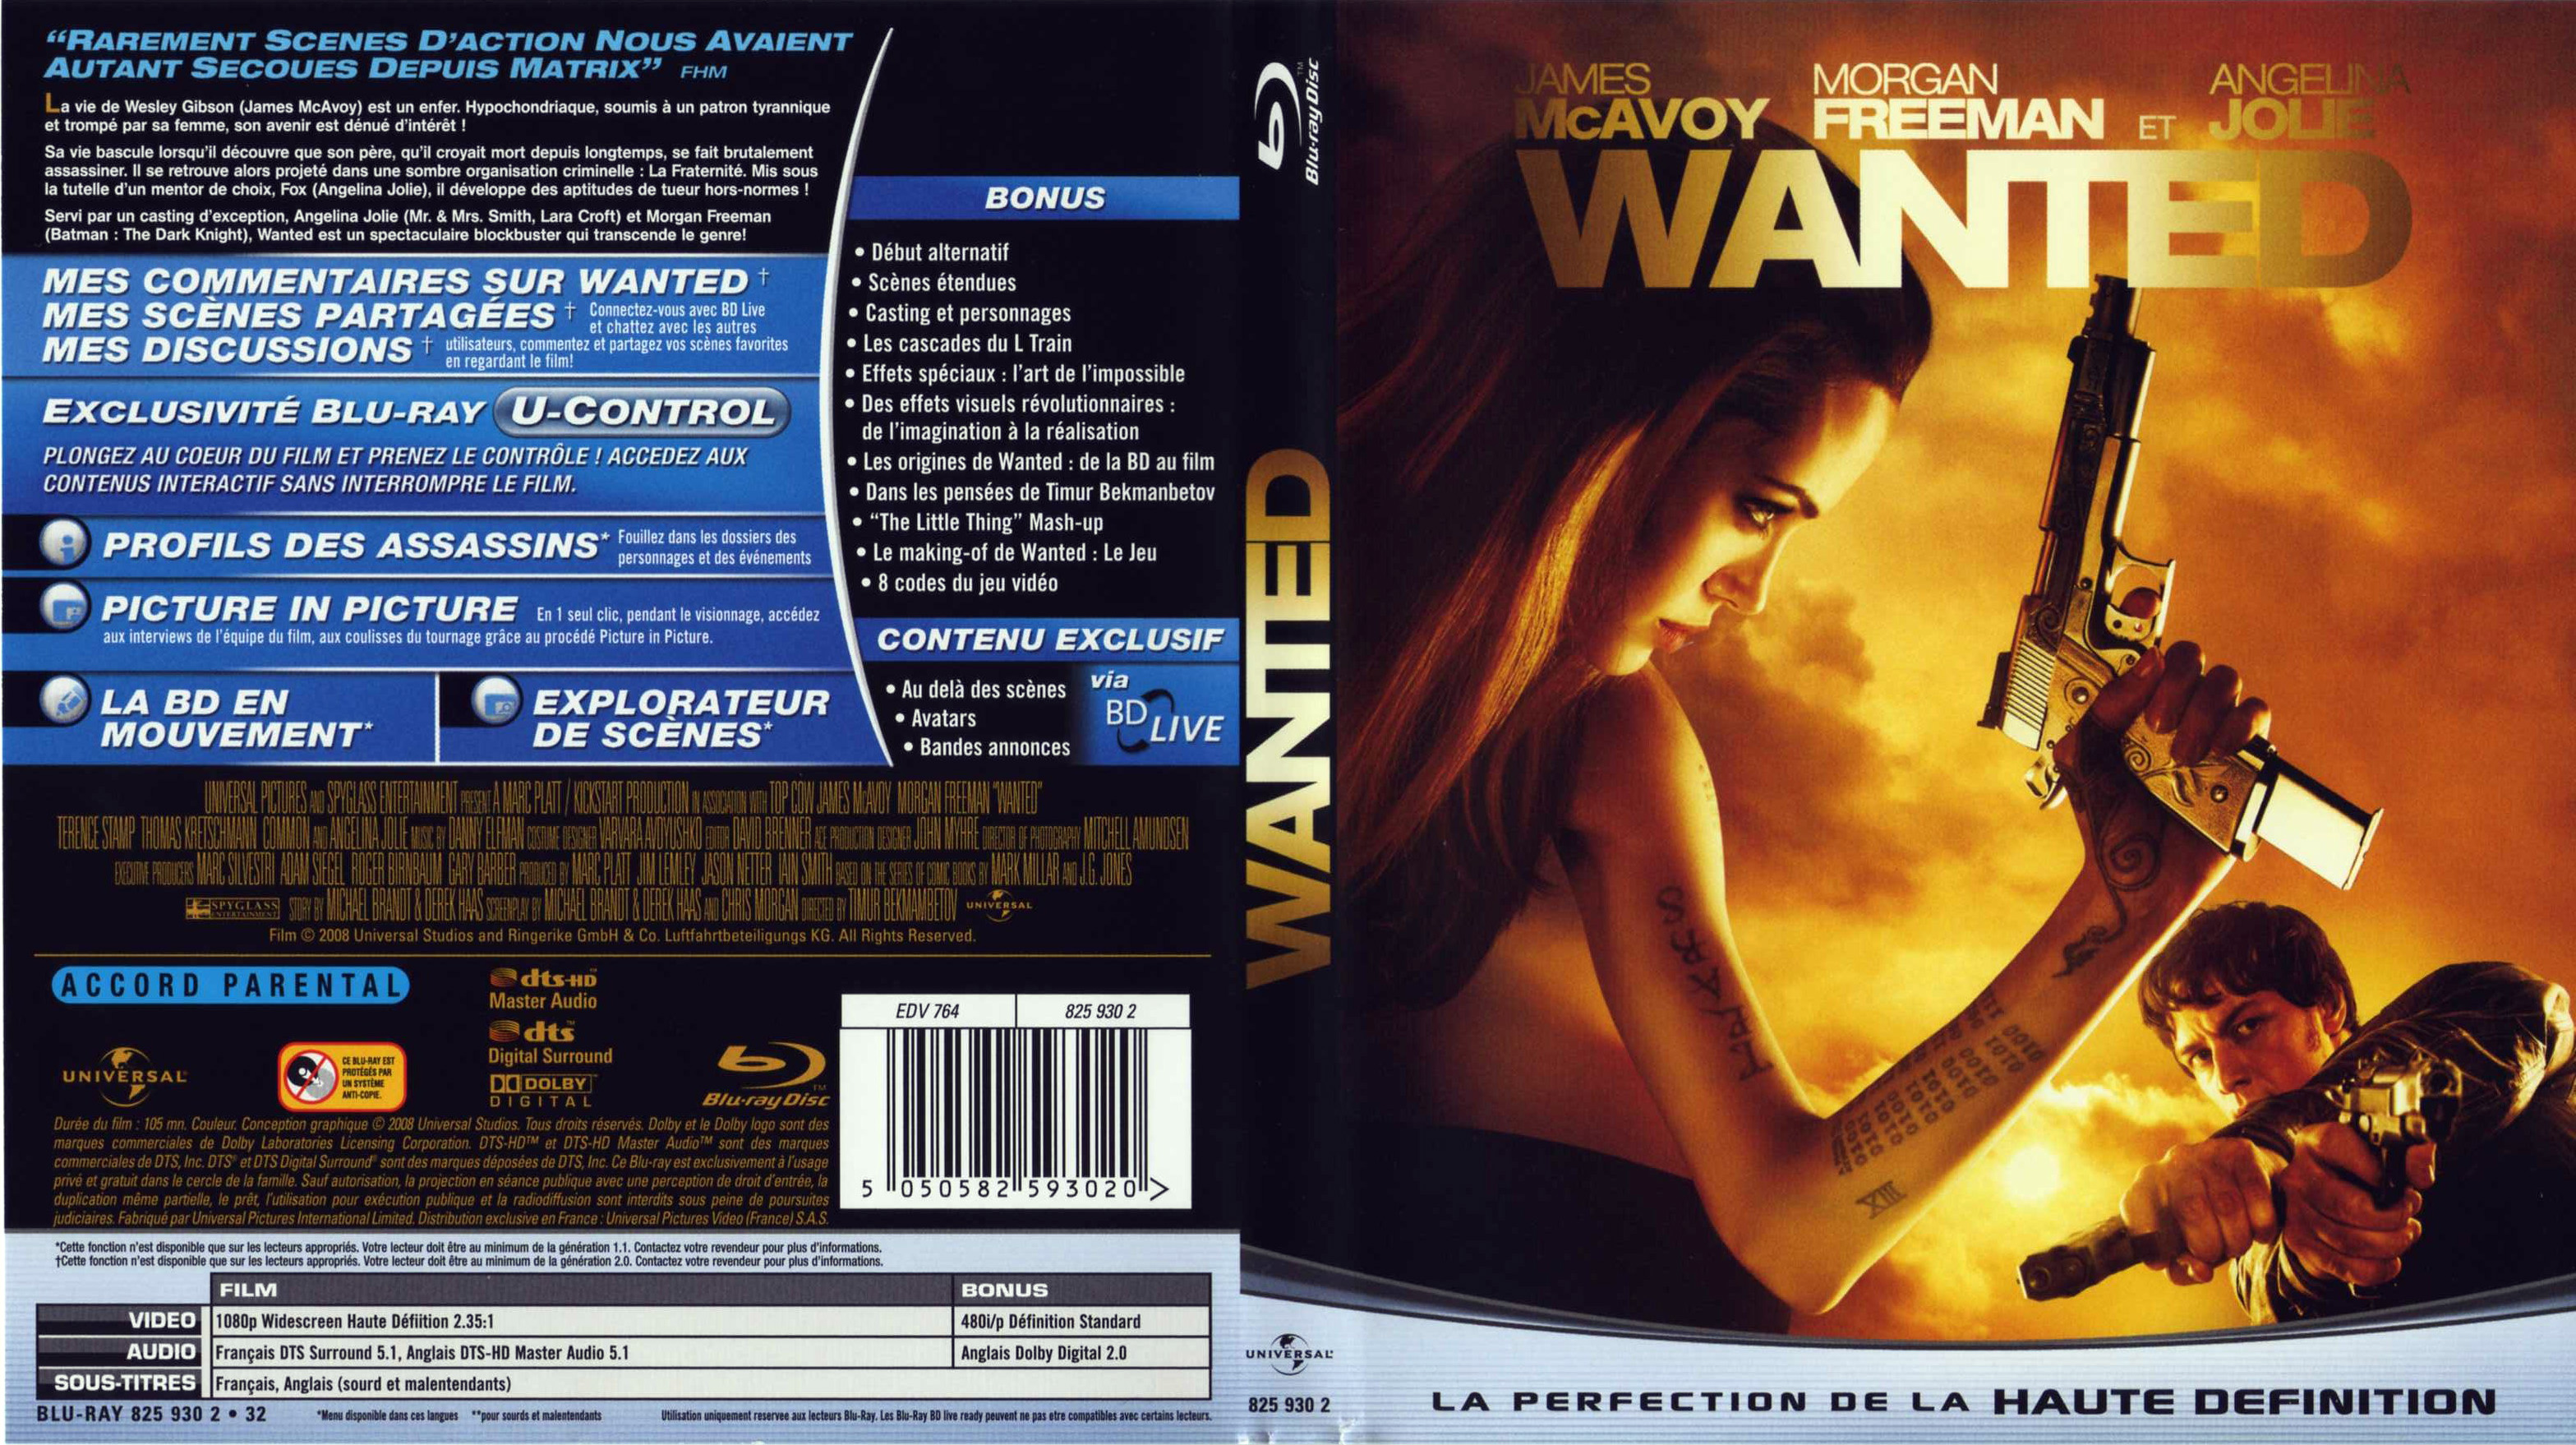 Jaquette DVD Wanted choisis ton destin (BLU-RAY)